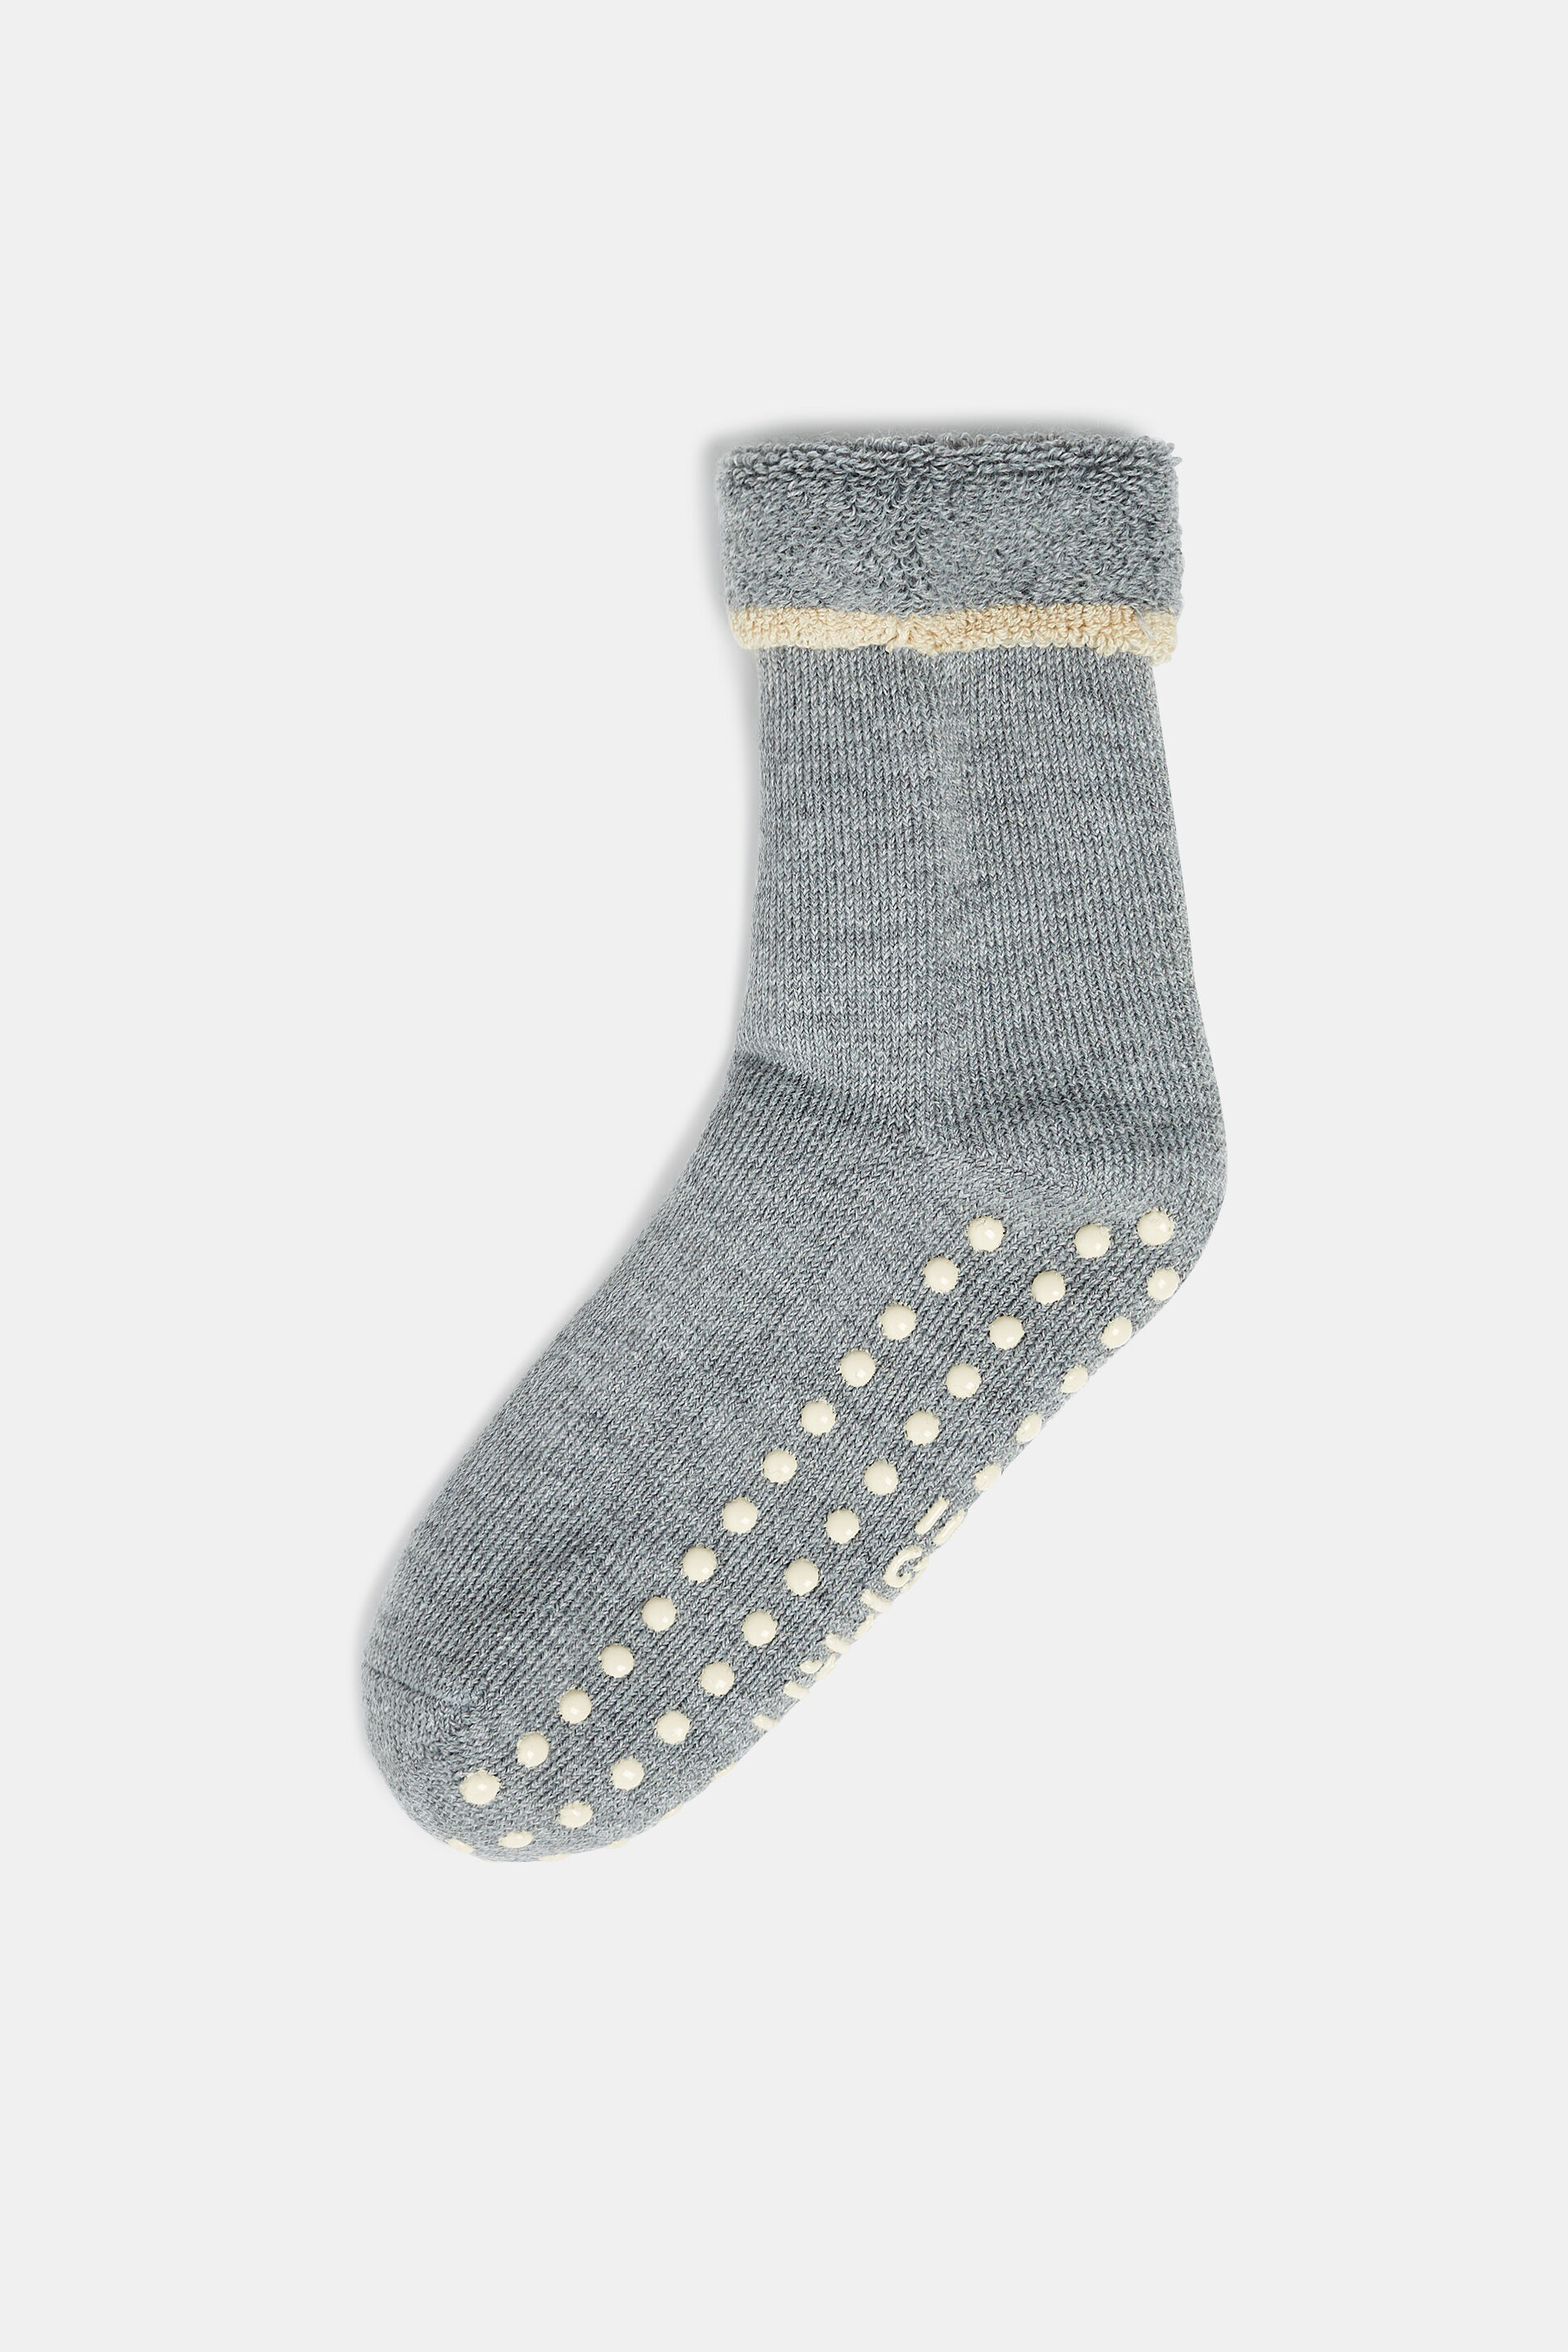 Esprit blend wool socks, stopper Soft